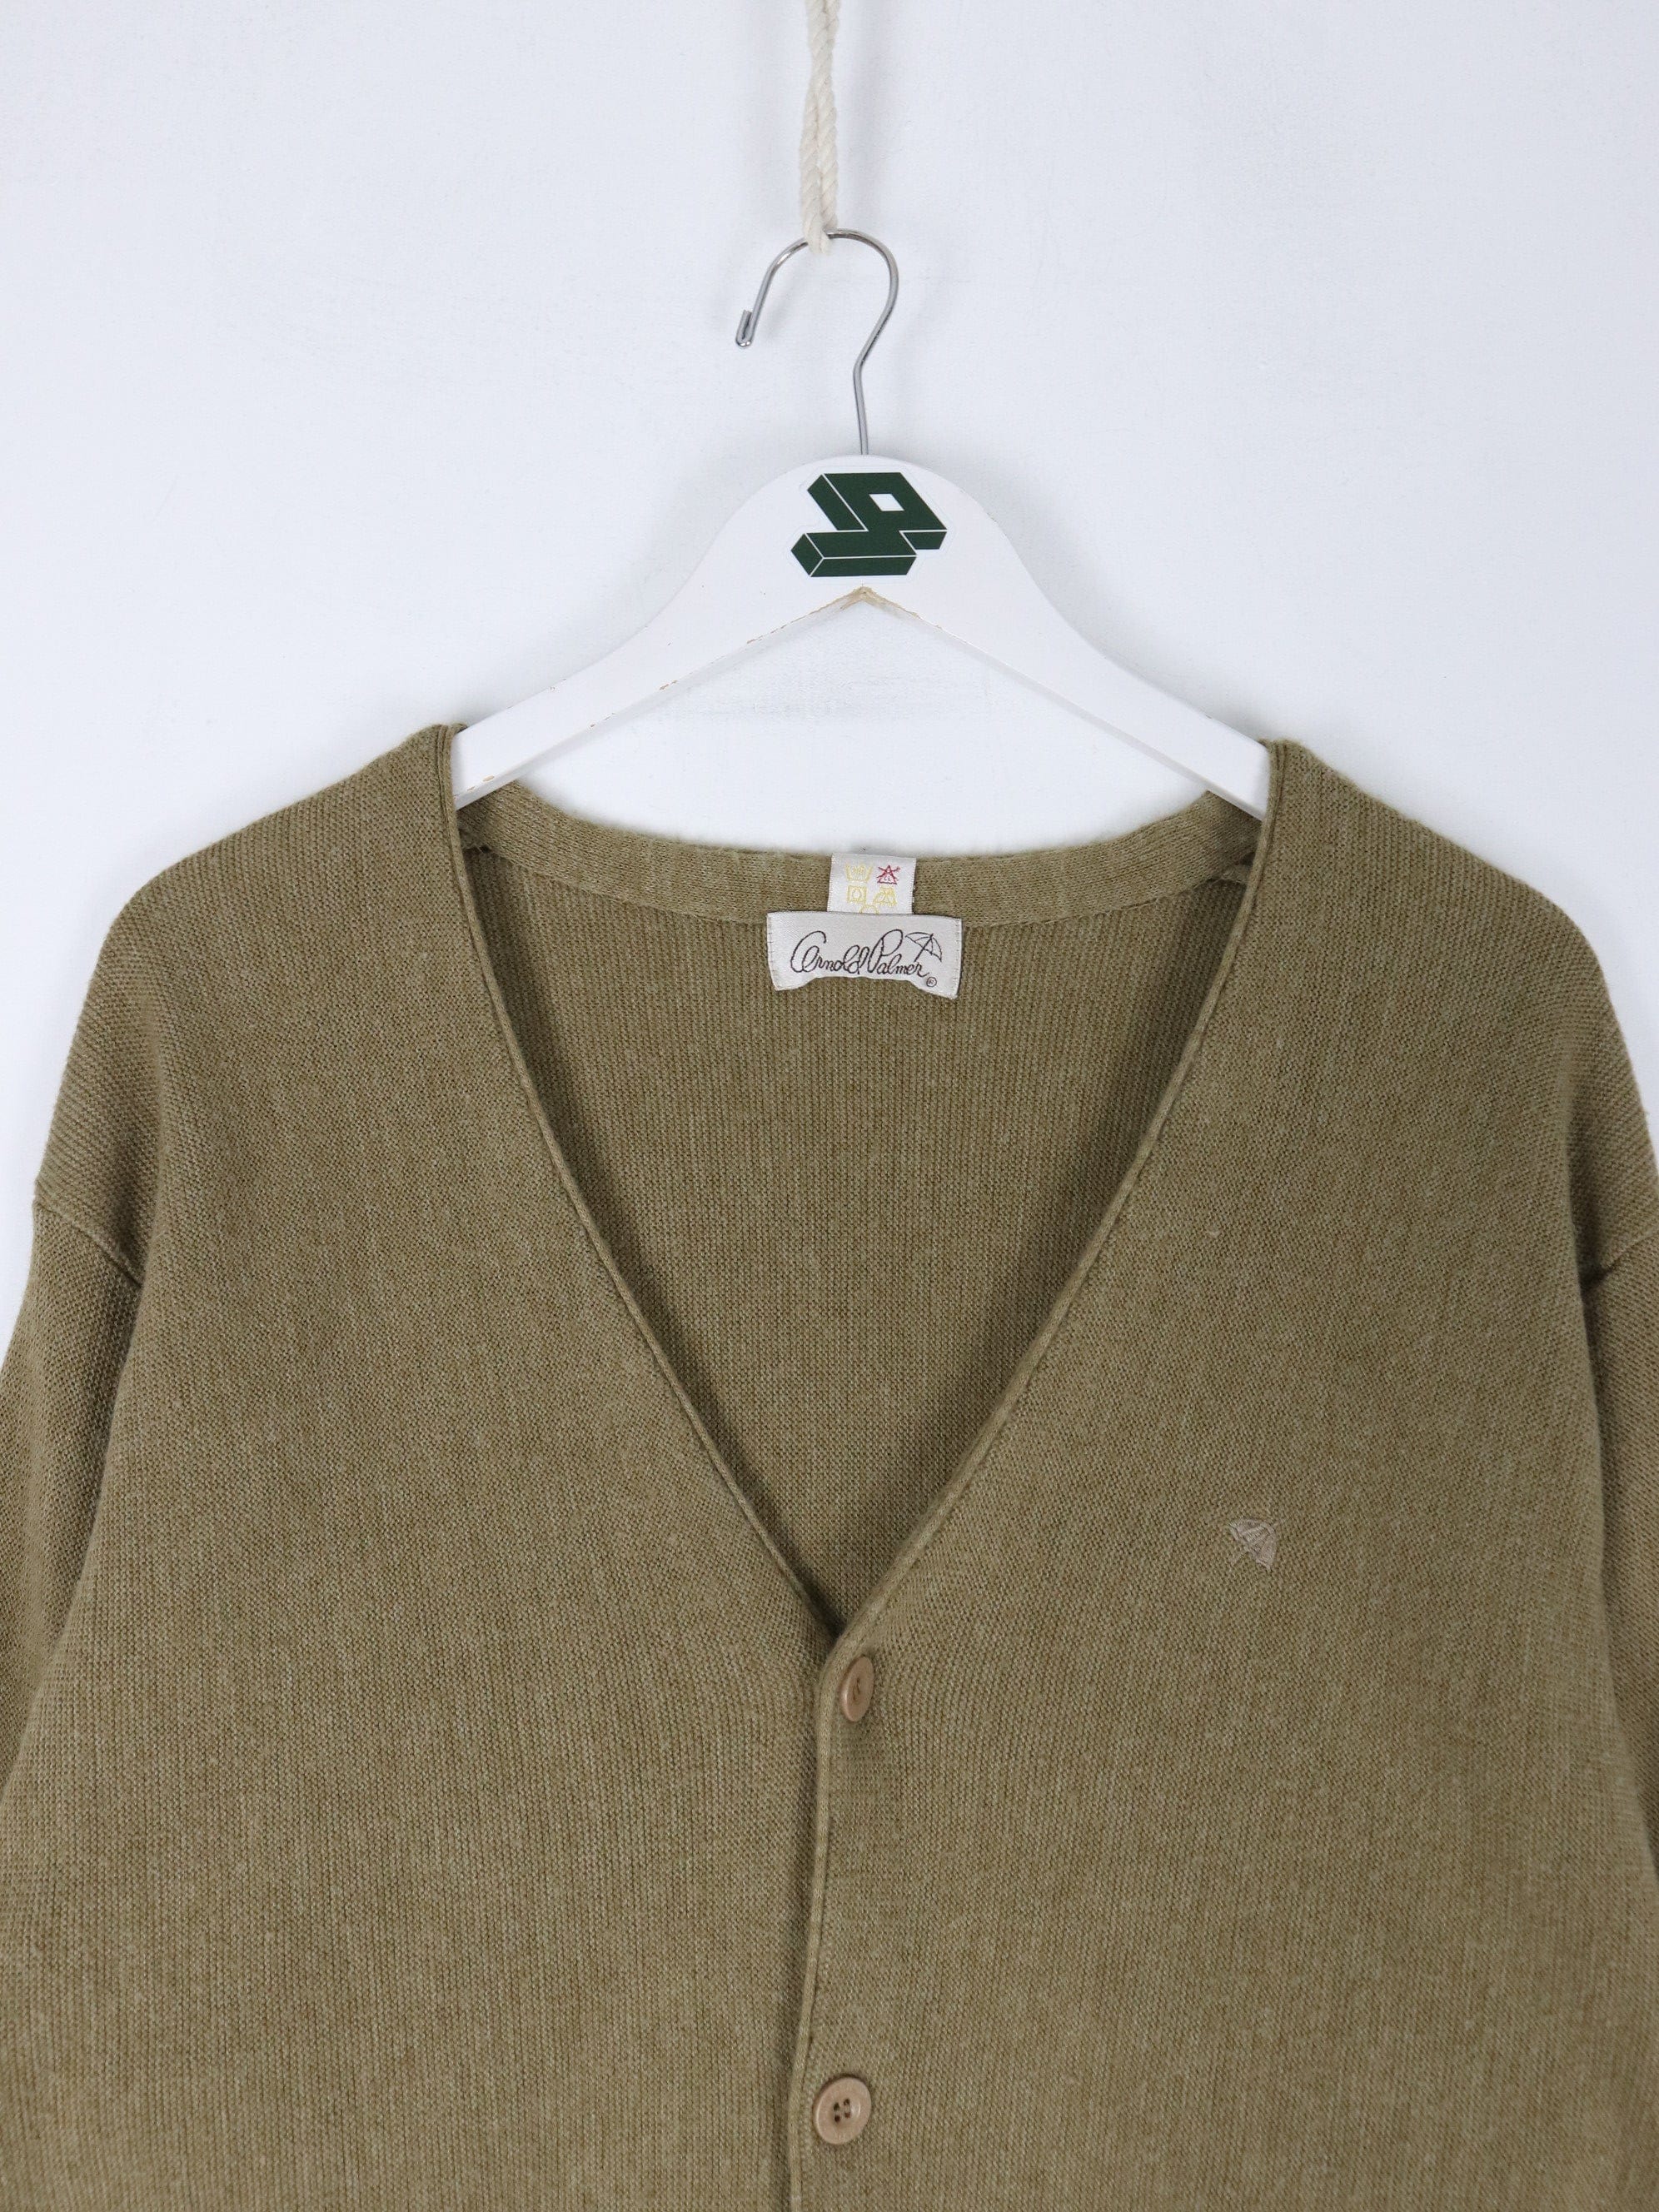 Vintage Arnold Palmer Sweater Mens XL Beige Knit Cardigan